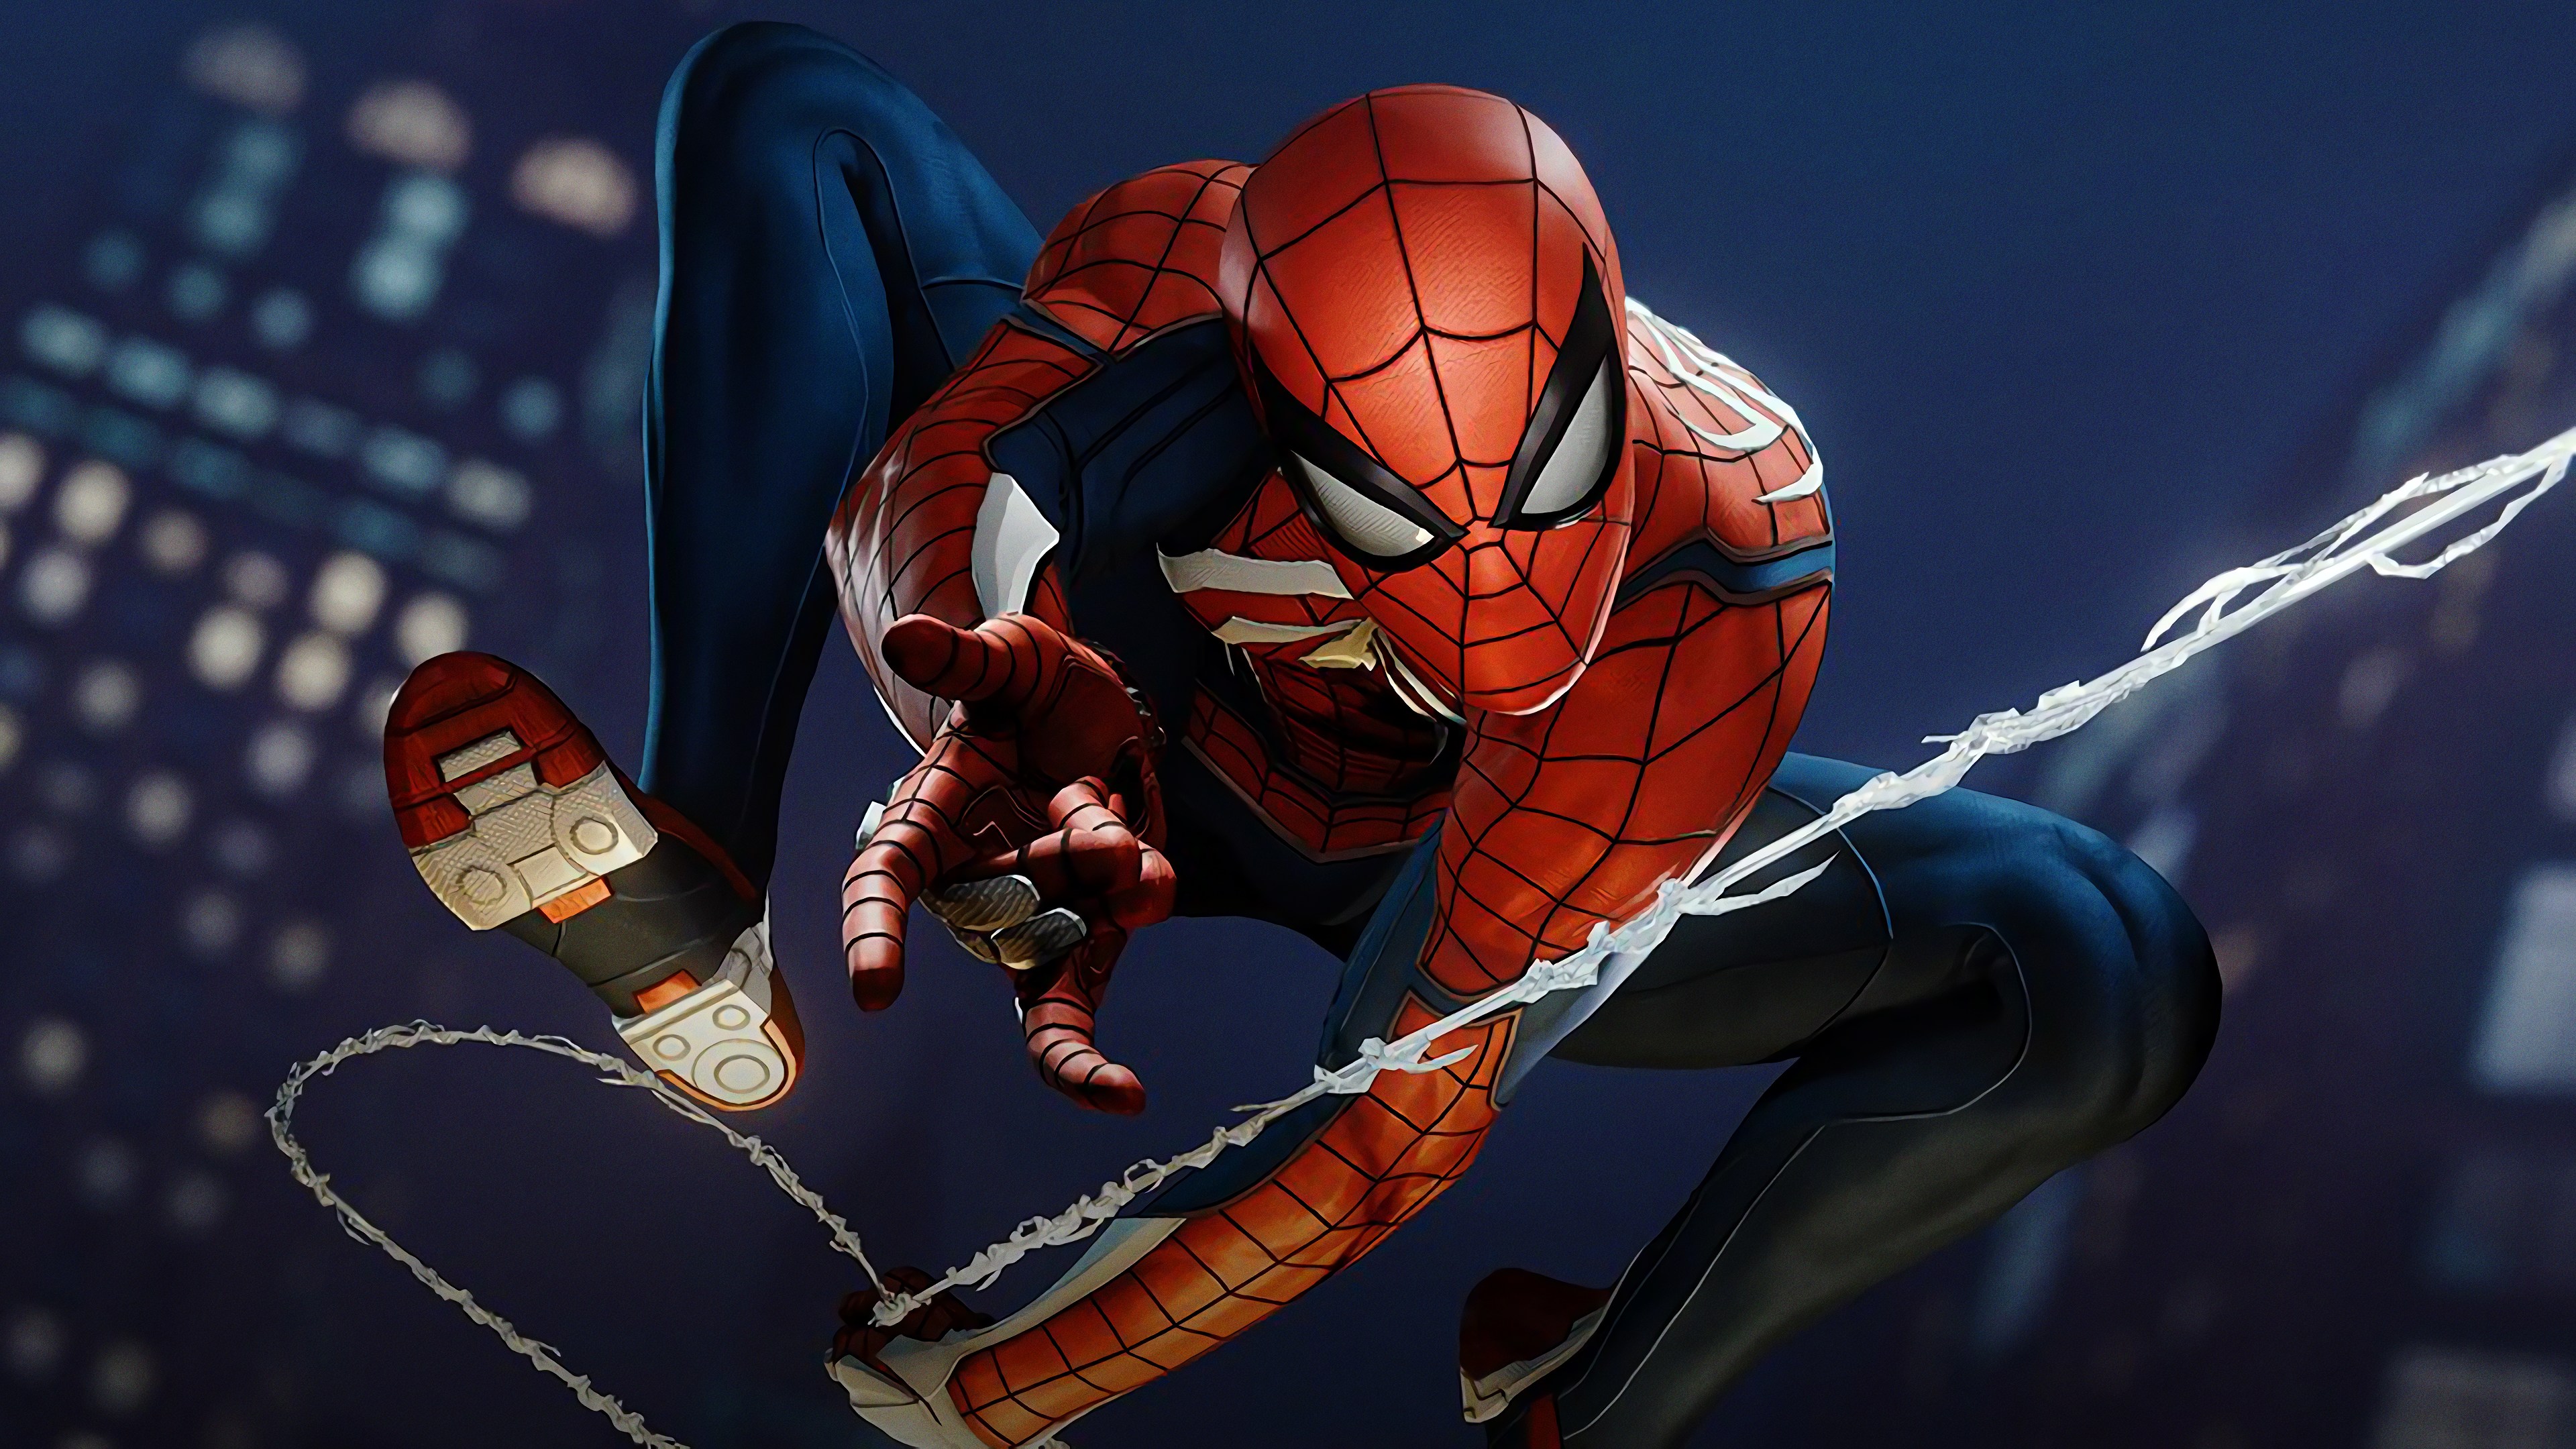 Spider Man (PS4) Man Web Swing 4k Ultra HD Wallpaper